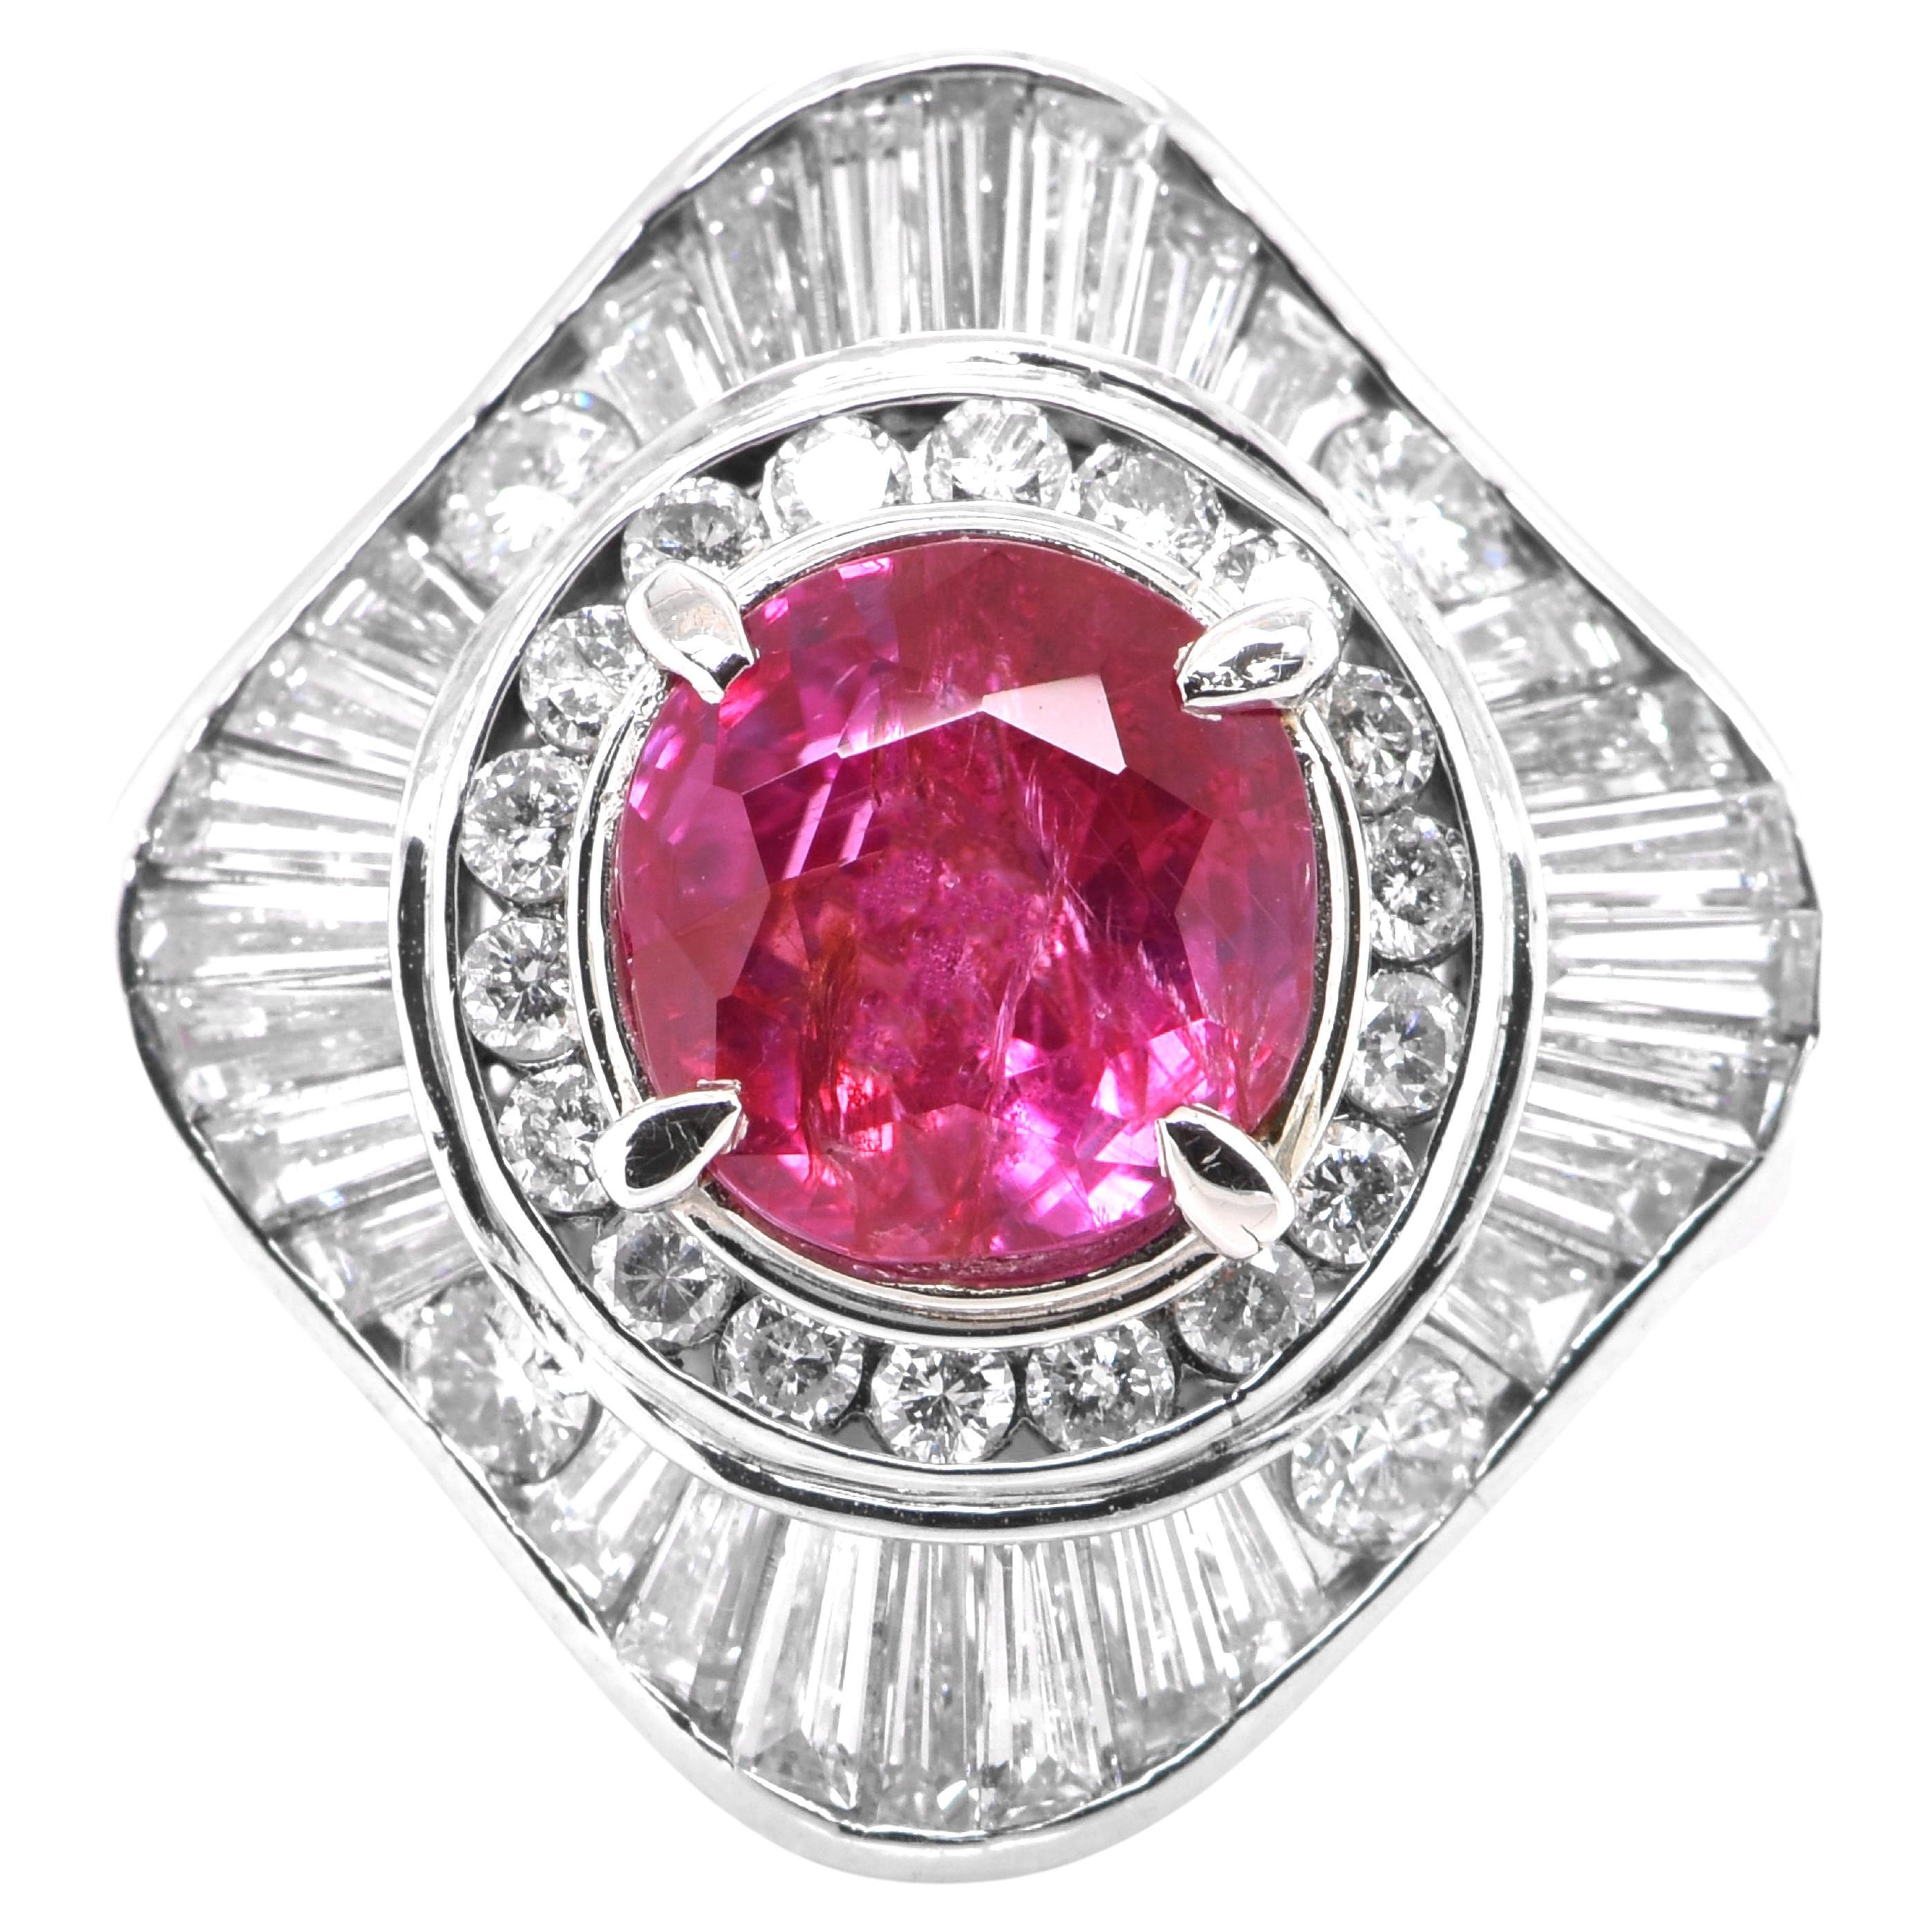 Vintage 3.32 Carat Natural Ruby and Diamond Ring Set in Platinum